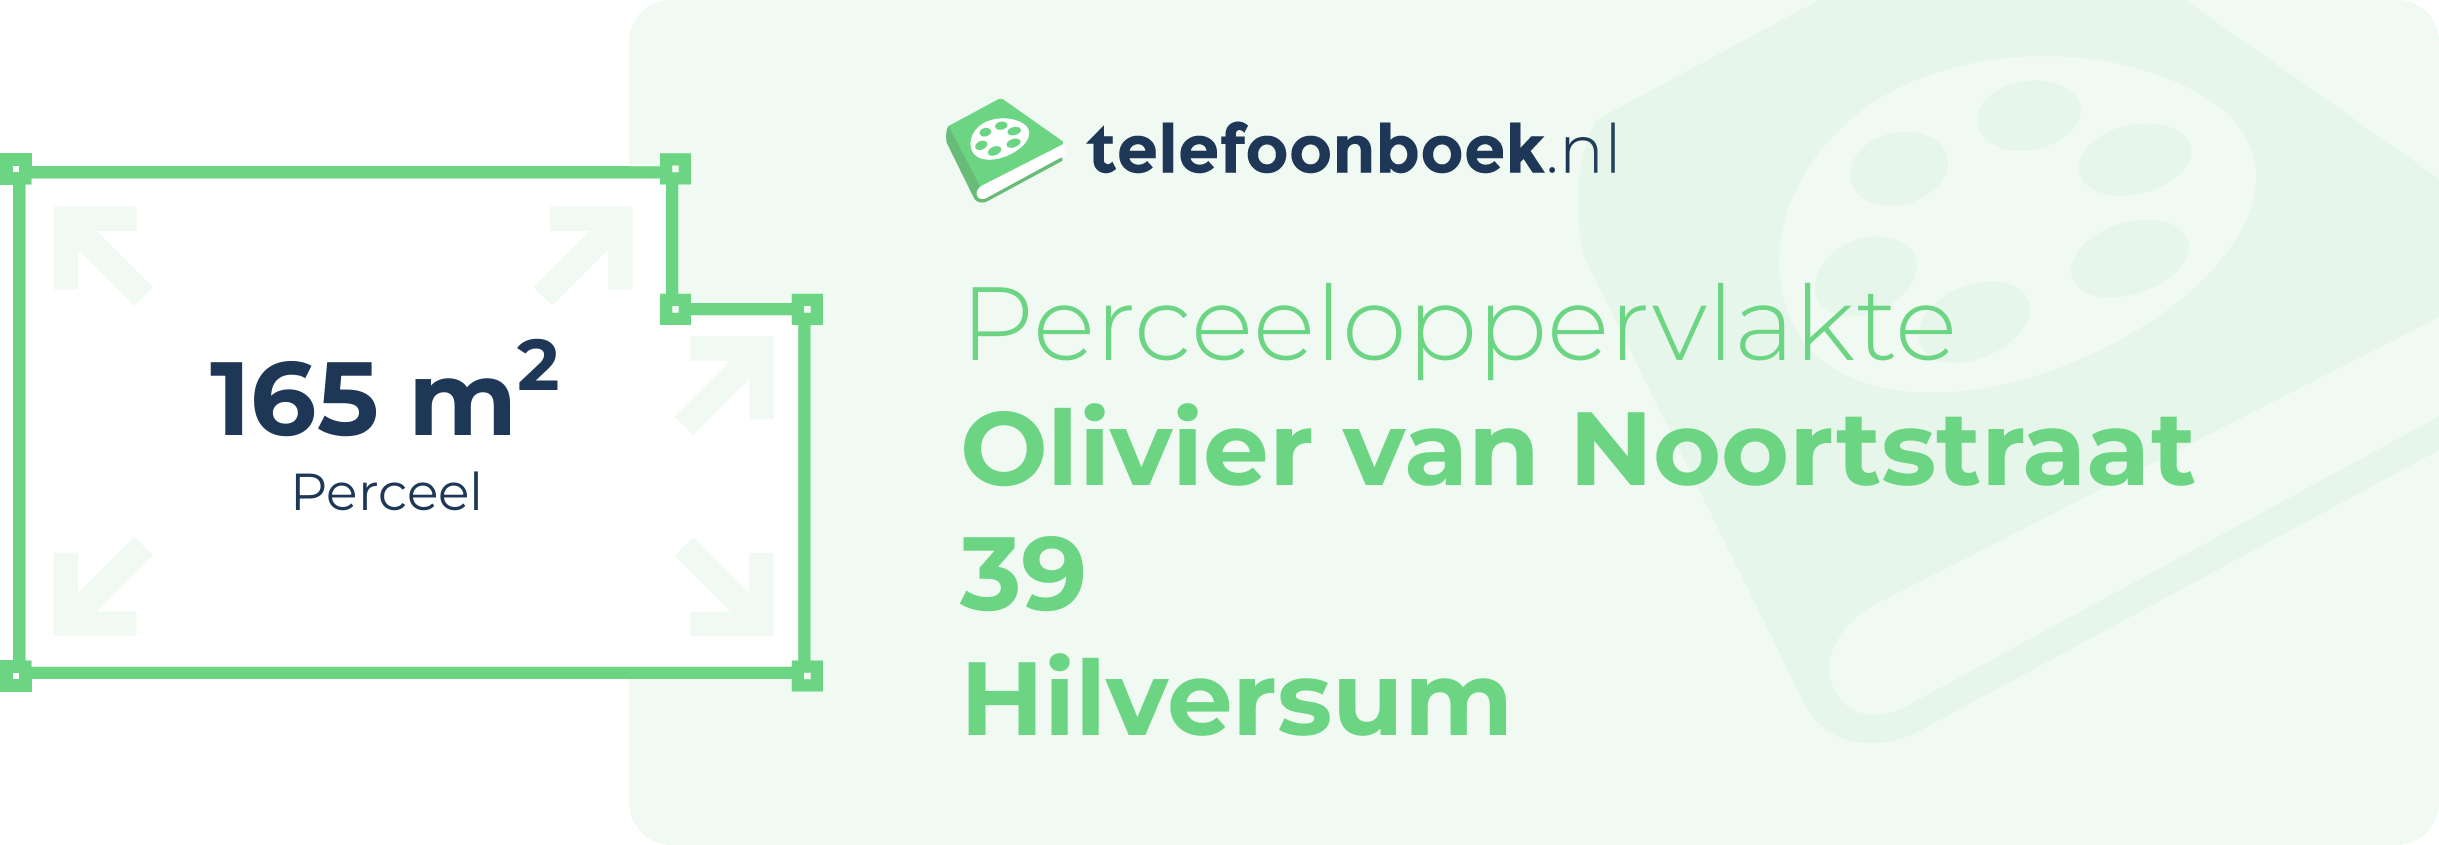 Perceeloppervlakte Olivier Van Noortstraat 39 Hilversum